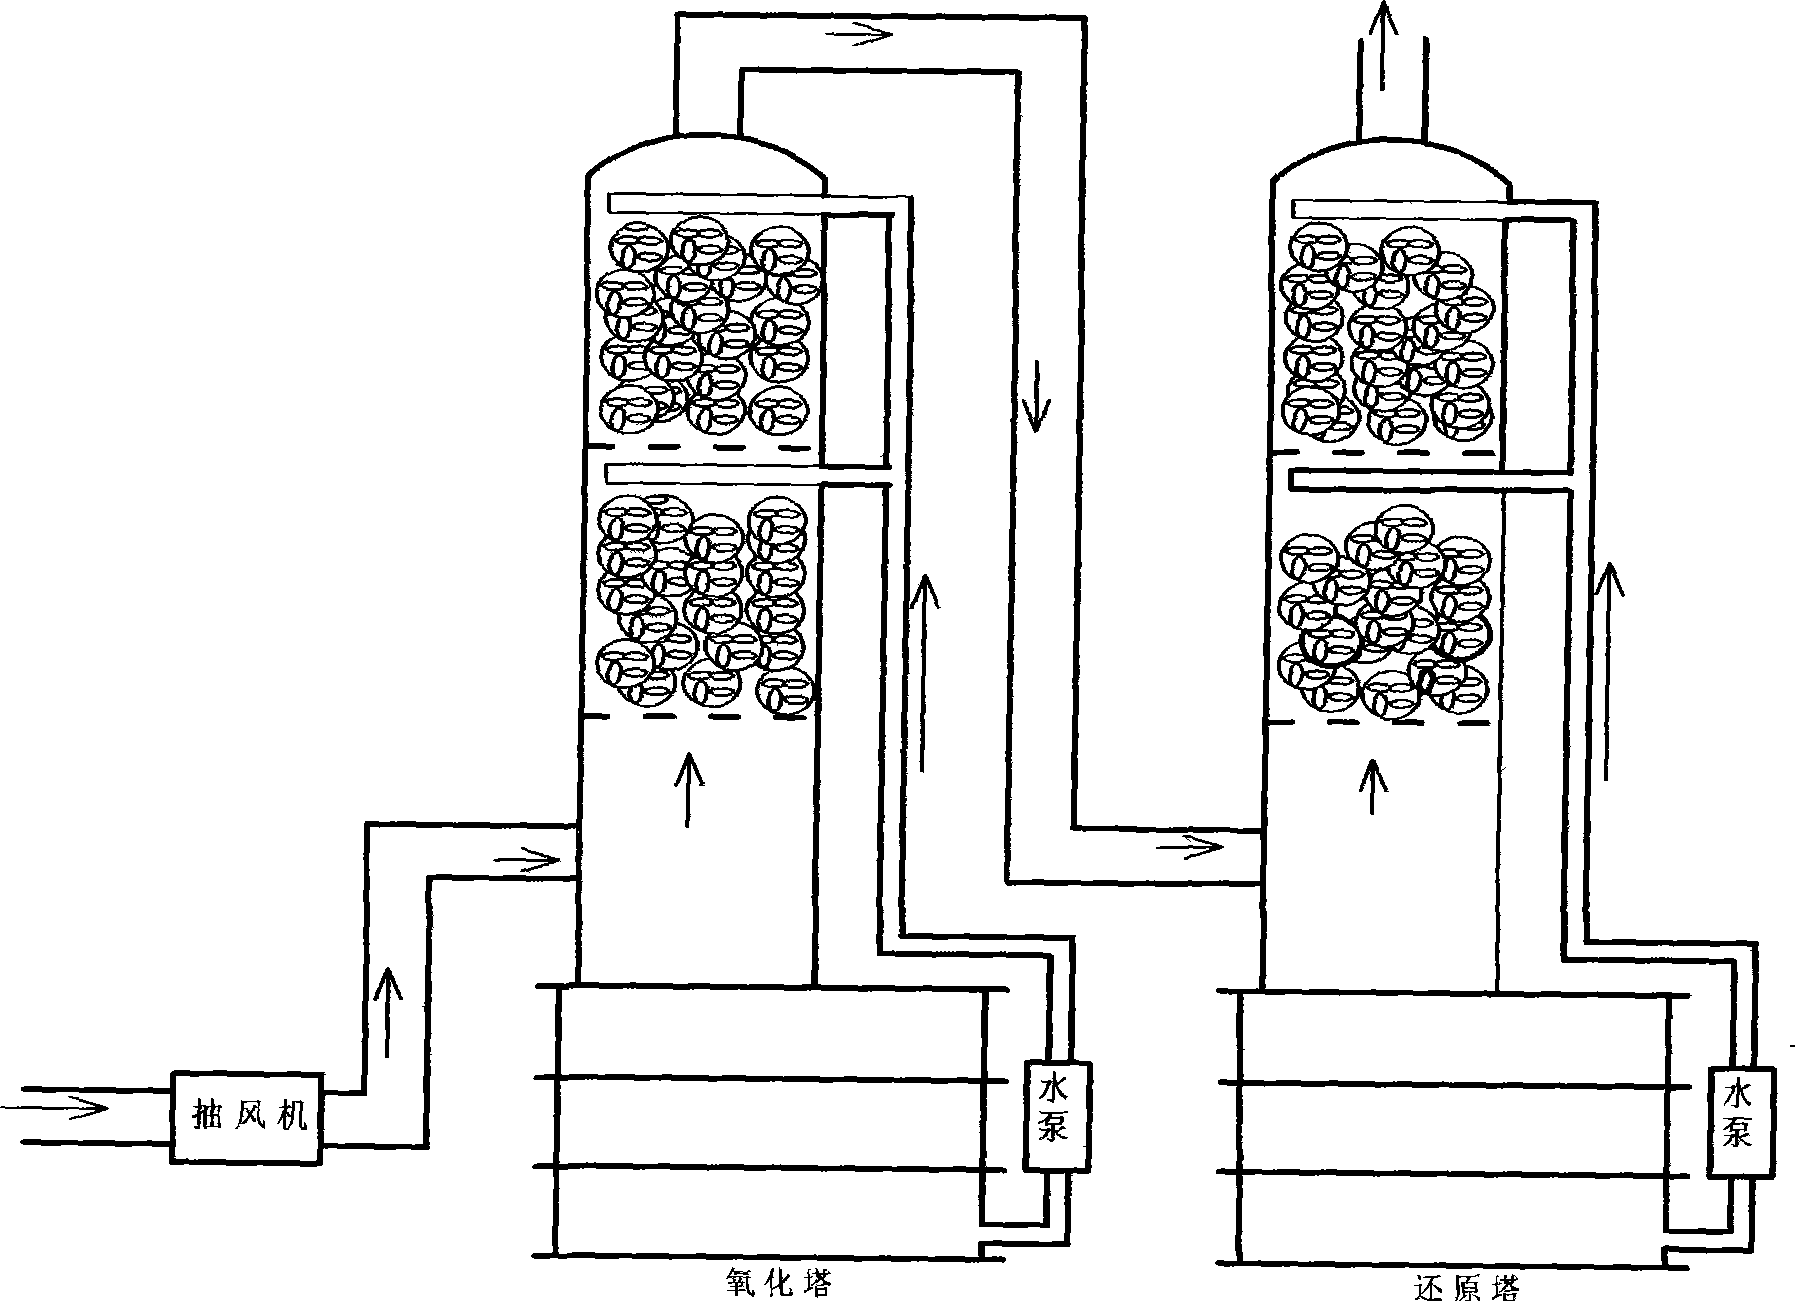 Method for processing nitrogen oxide exhaust